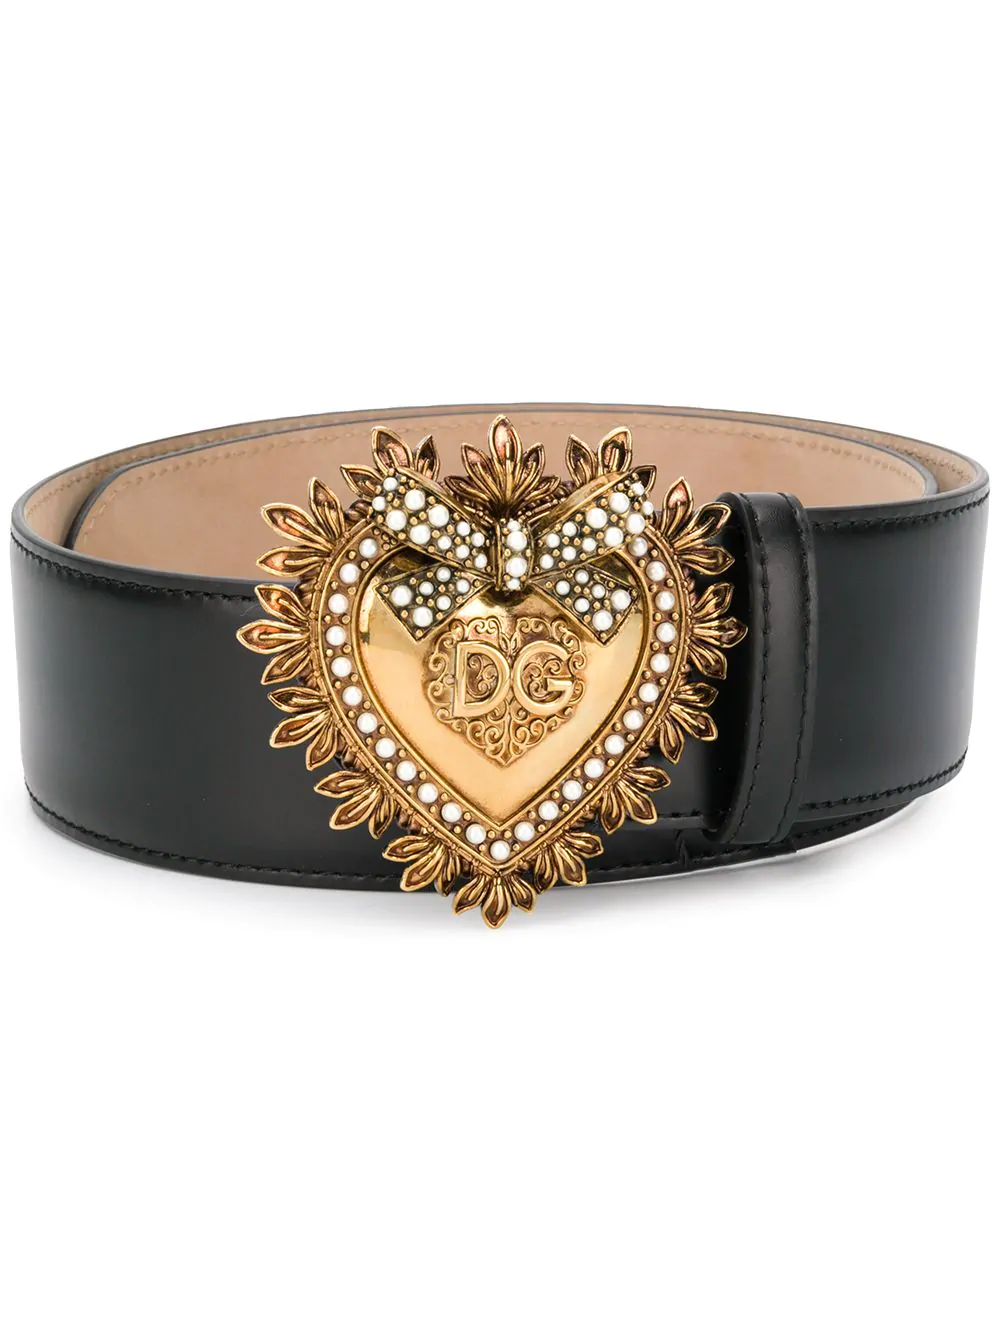 Dolce & Gabbana Devotion Buckle Belt - Black | ModeSens